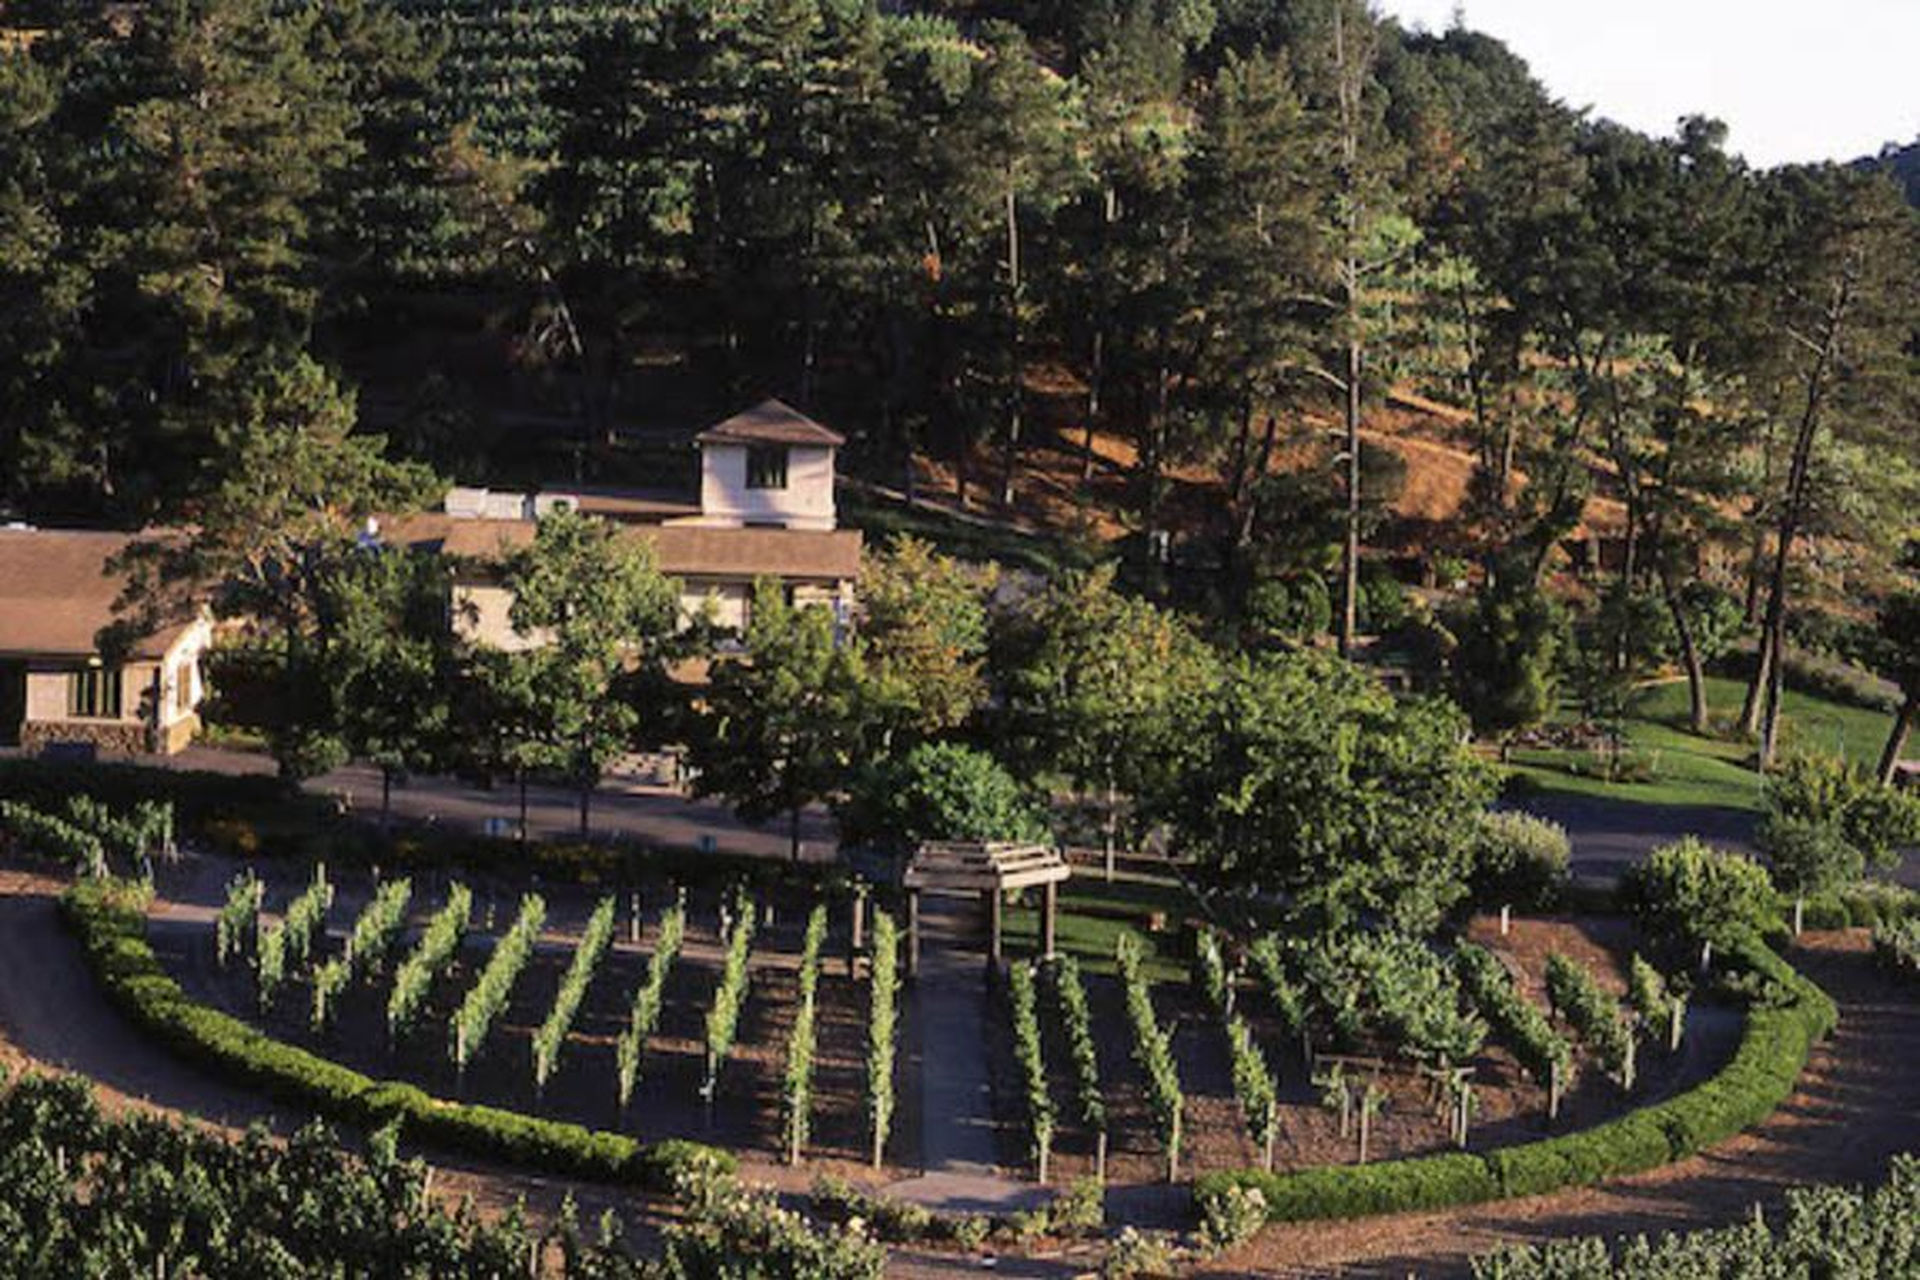 06 - Scenic view of Pine Ridge Winery vineyards, showcasing lush grapevines and rolling hills, encapsulating the essence of Pine Ridge Winery